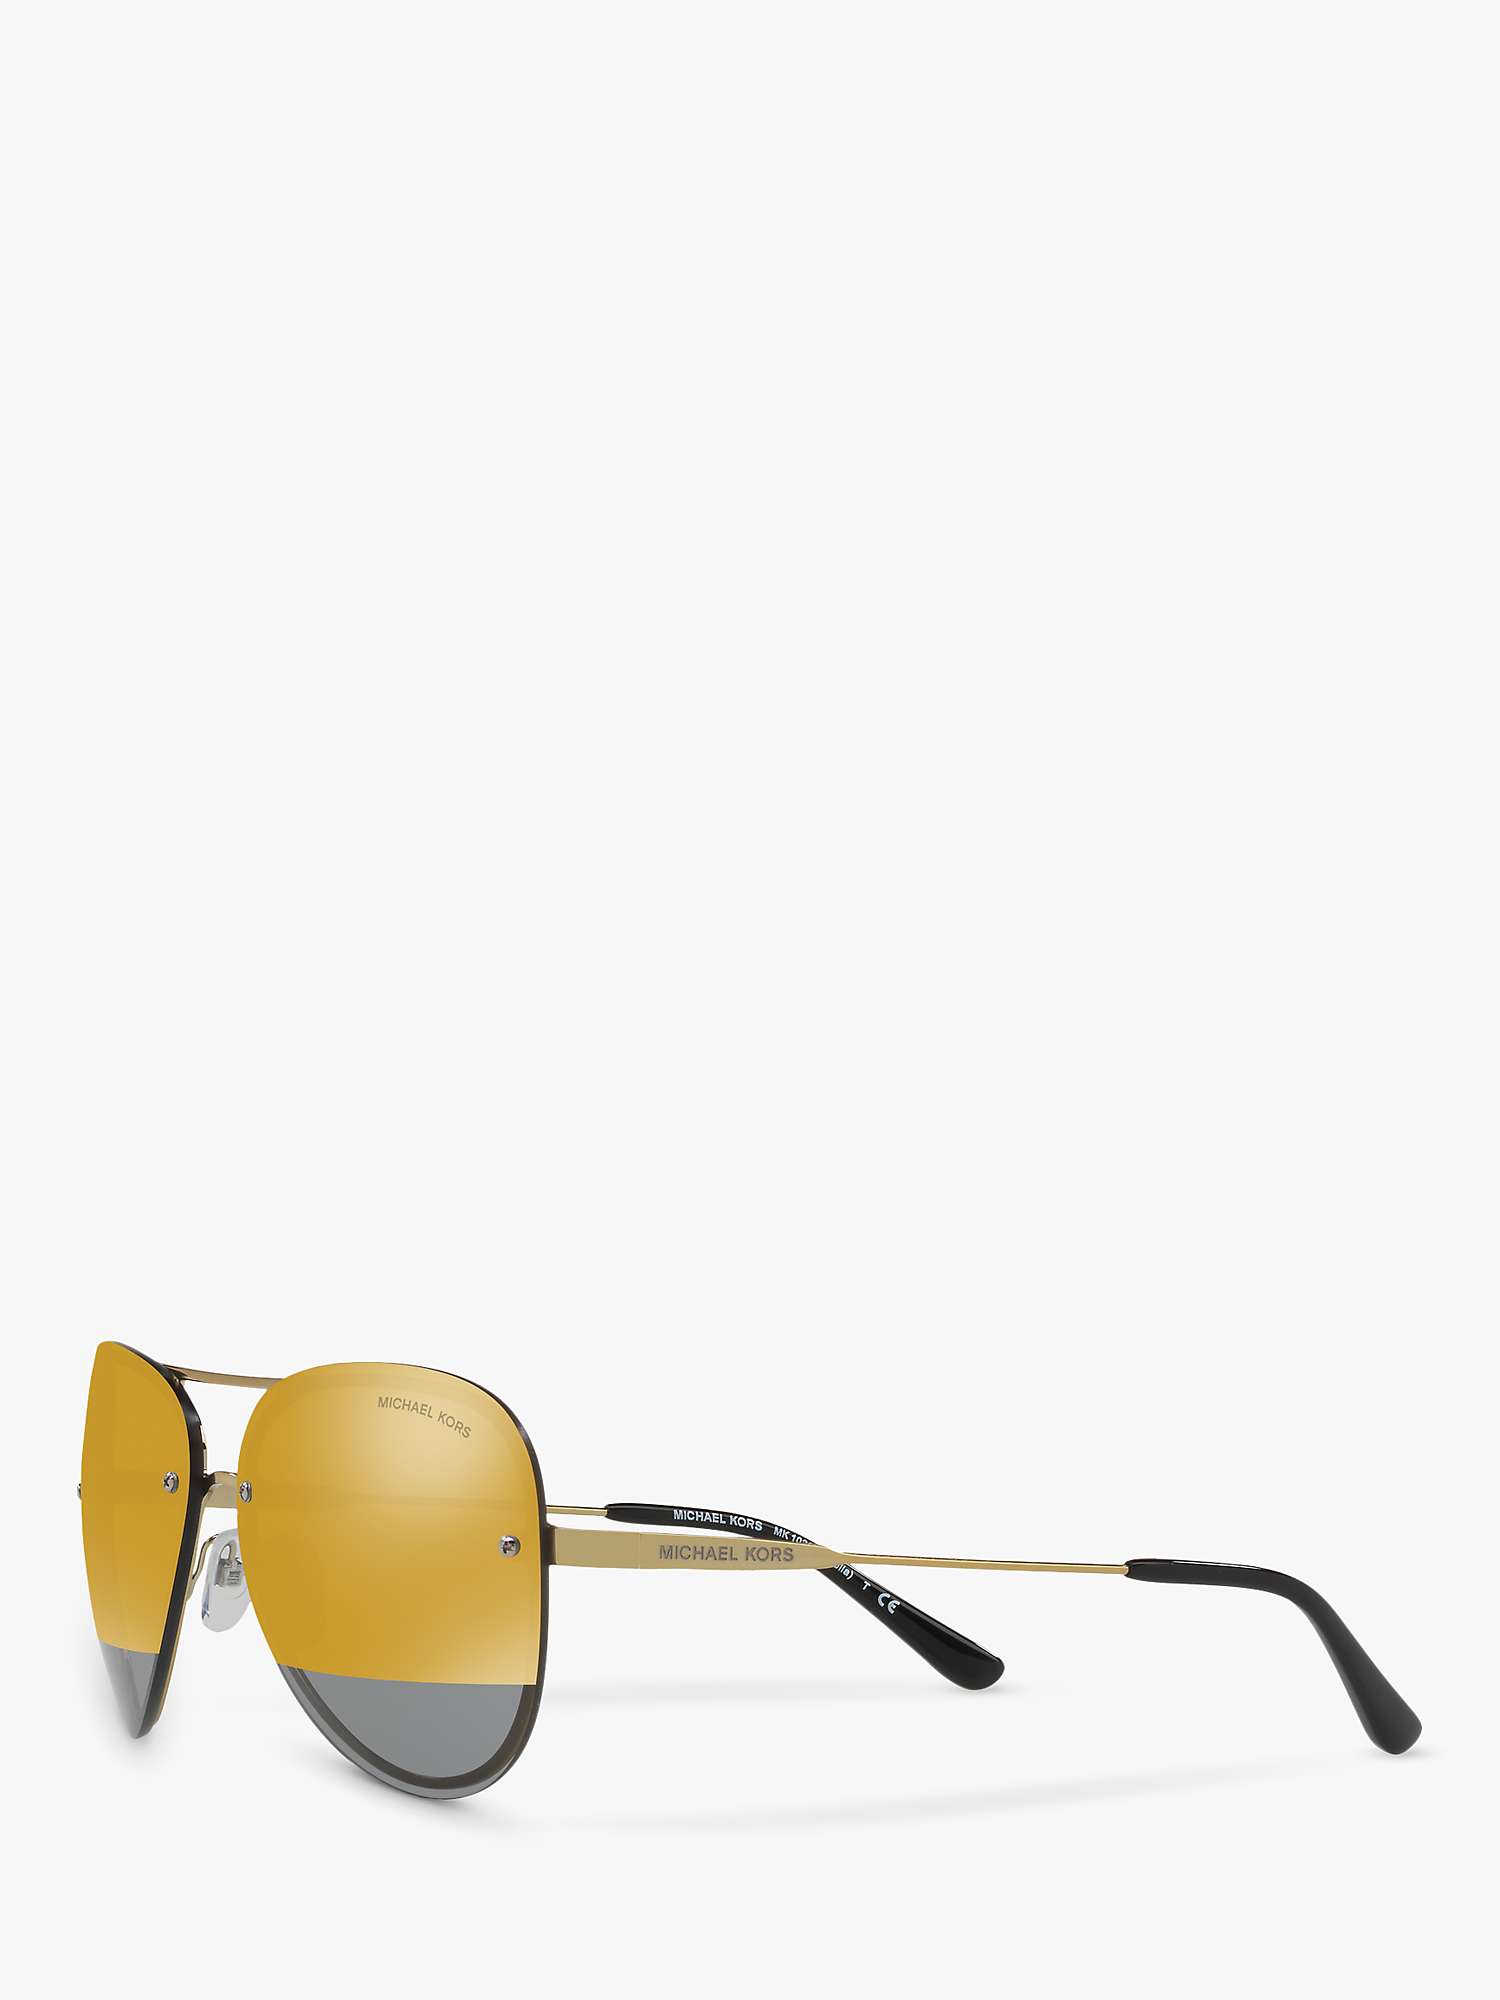 Buy Michael Kors MK1026 Women's La Jolla Aviator Sunglasses, Pale Gold/Grey Online at johnlewis.com